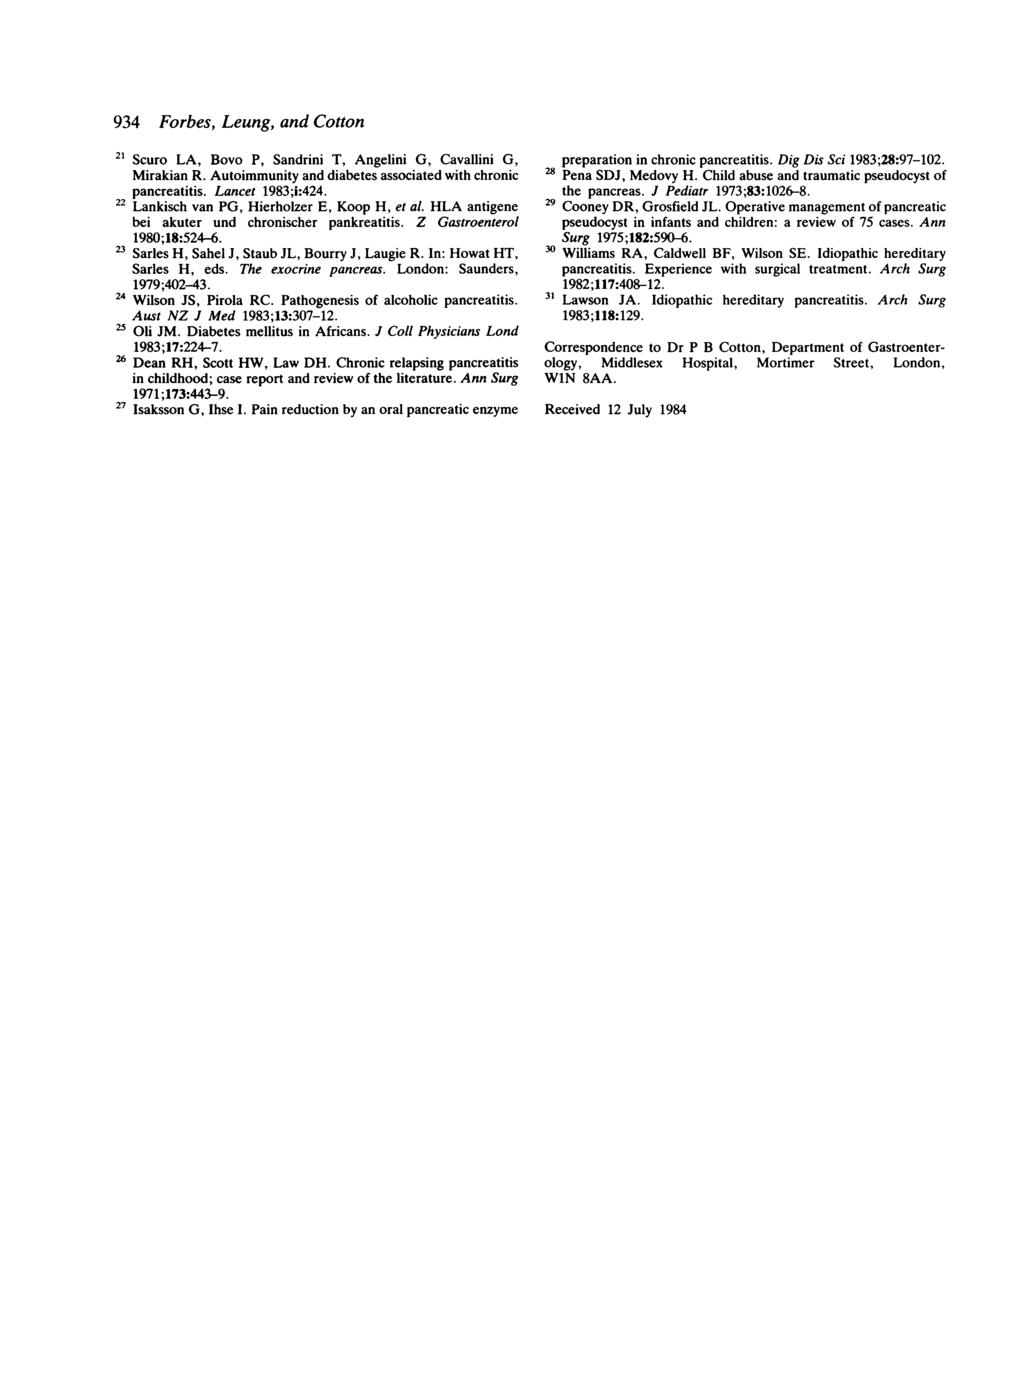 934 Forbes, Leung, and Cotton 21 Scuro LA, Bovo P, Sandrini T, Angelini G, Cavallini G, Mirakian R. Autoimmunity and diabetes associated with chronic pancreatitis. Lancet 1983;i:424.